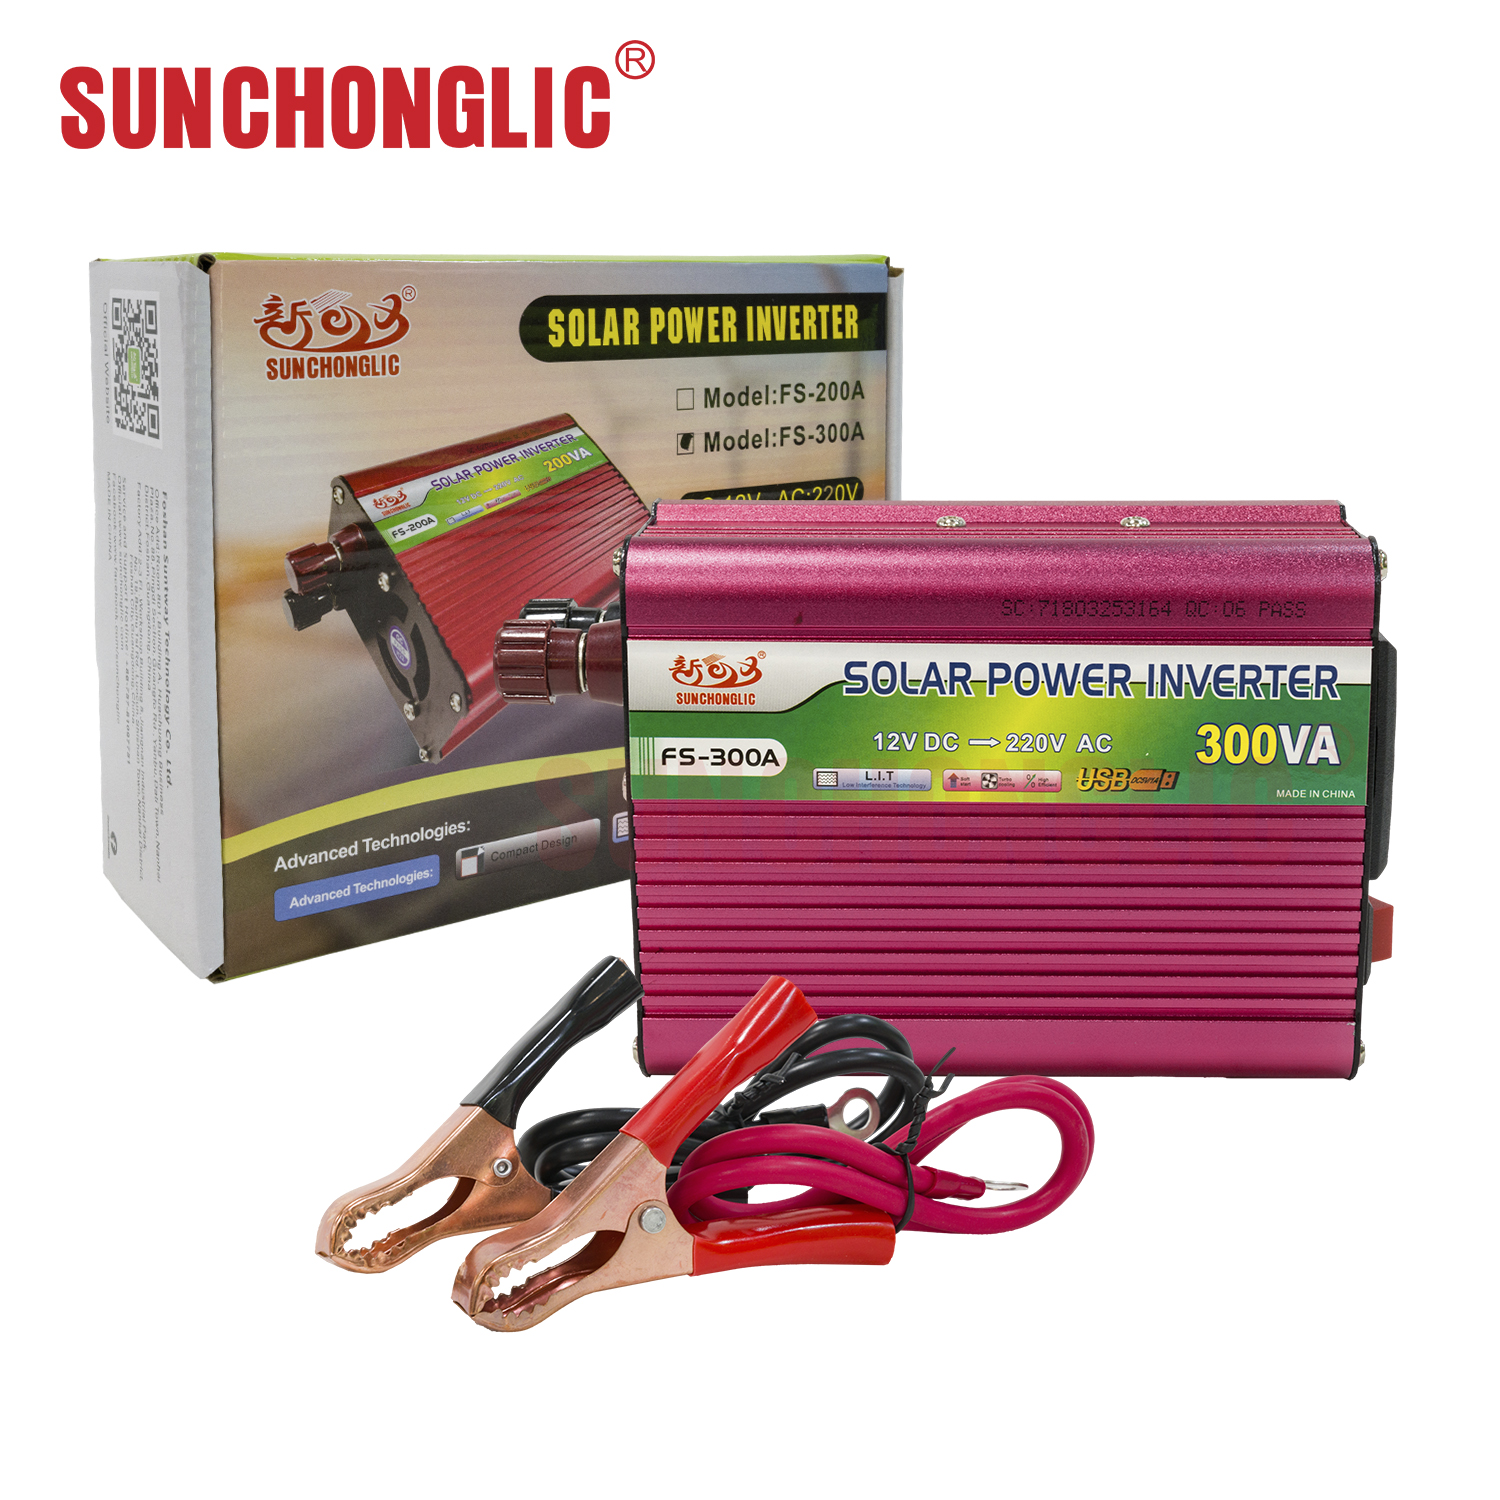 Sunchonglic inverter price solar 12v 220v 300va 300w power inverter